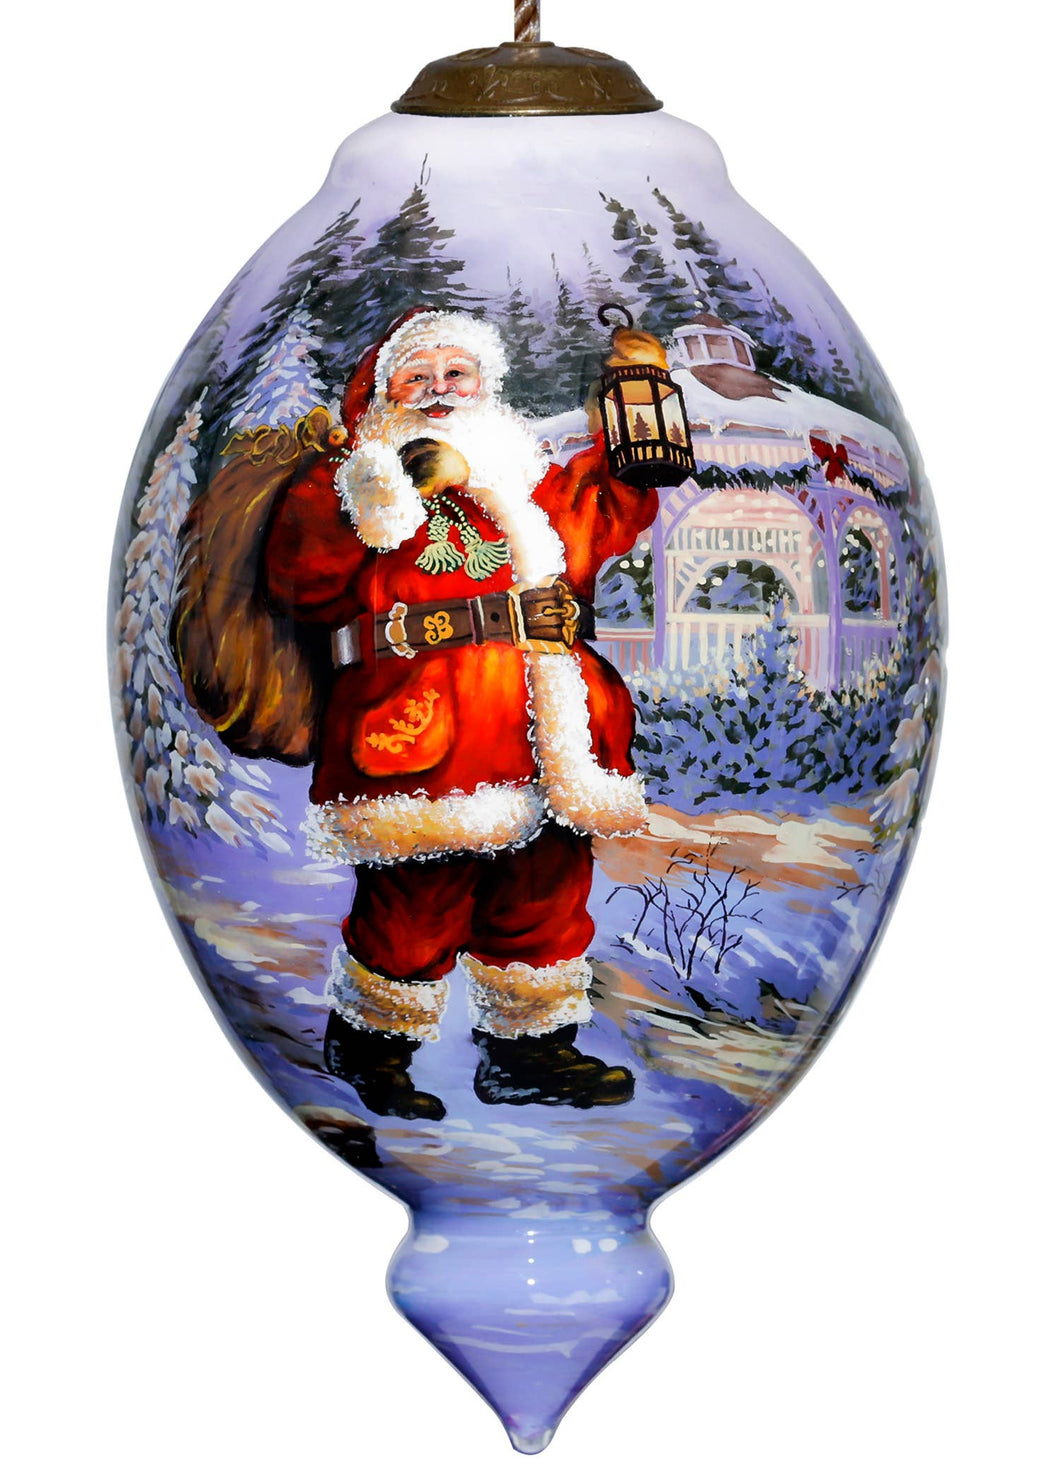 LIMITED EDITION Kris Kringle Santa Glass Christmas Ornament - Hand Painted